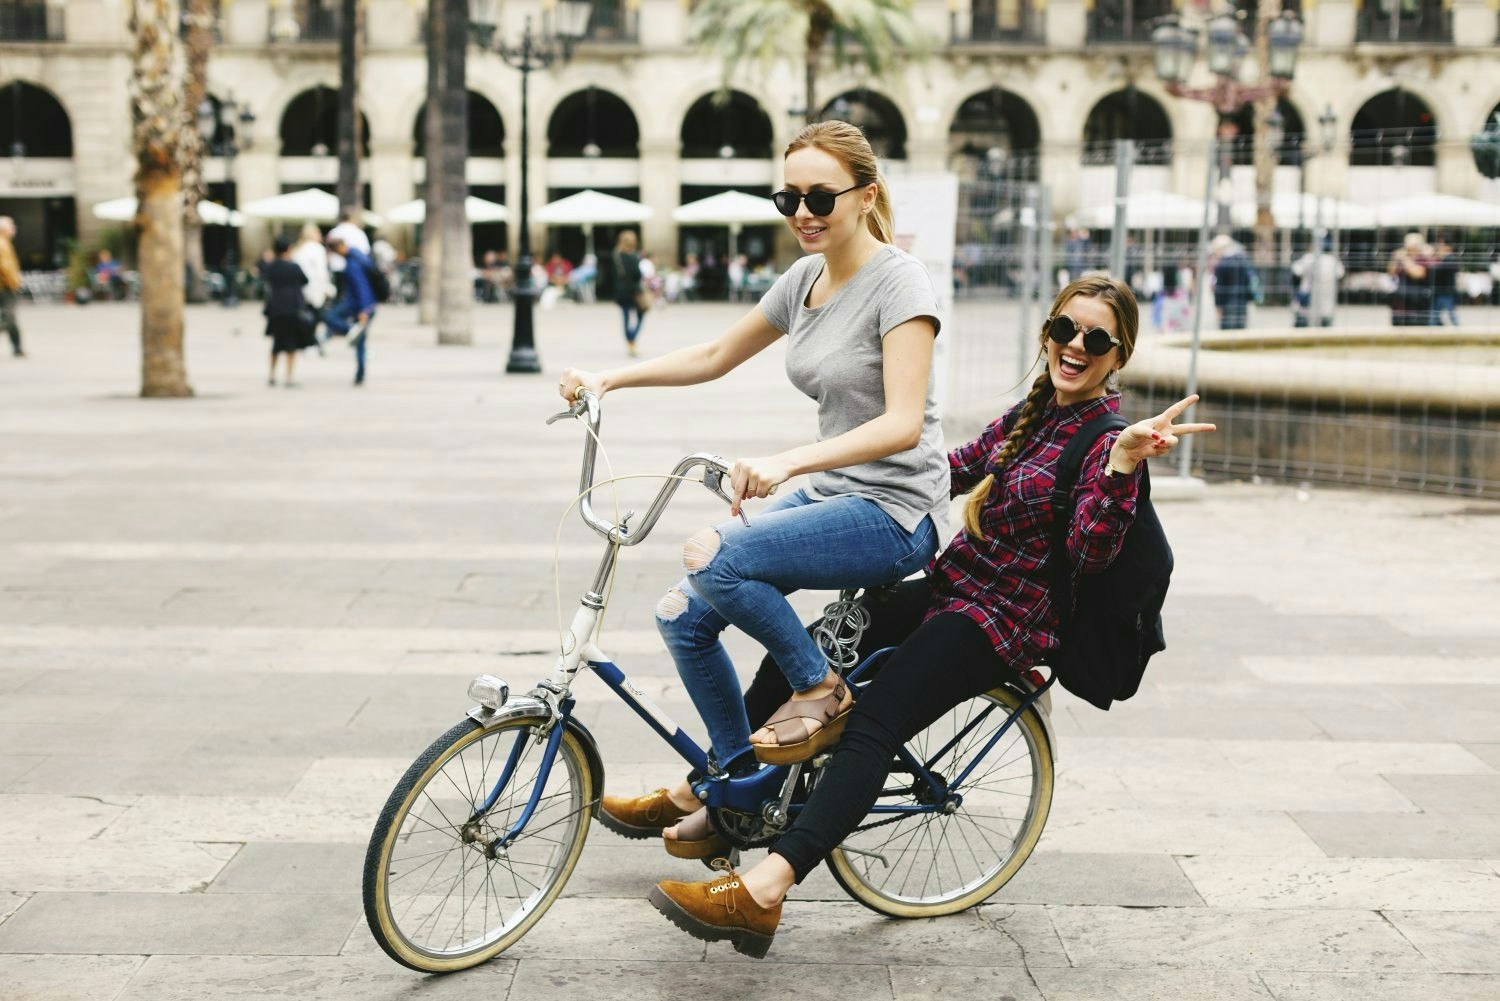 Two young women cycling on one bike